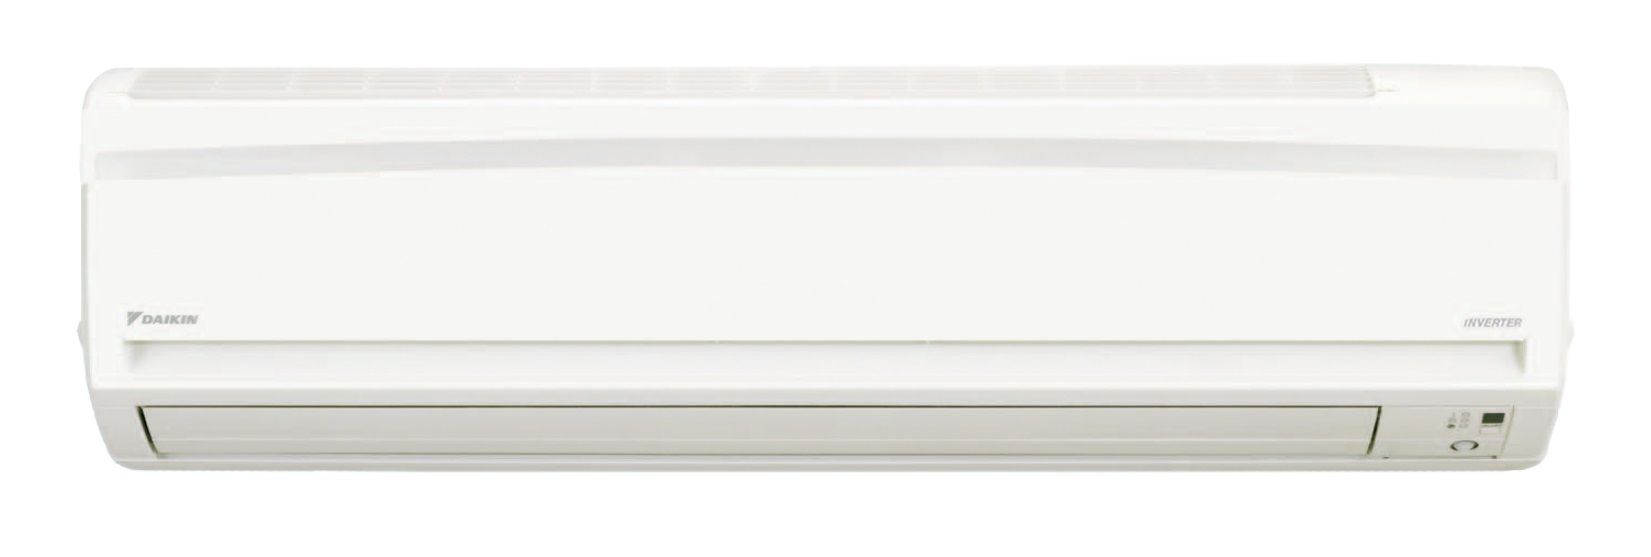 (image for) 大金 FTXS60LVMN 二匹半 掛牆式分體冷氣機 (變頻冷暖)